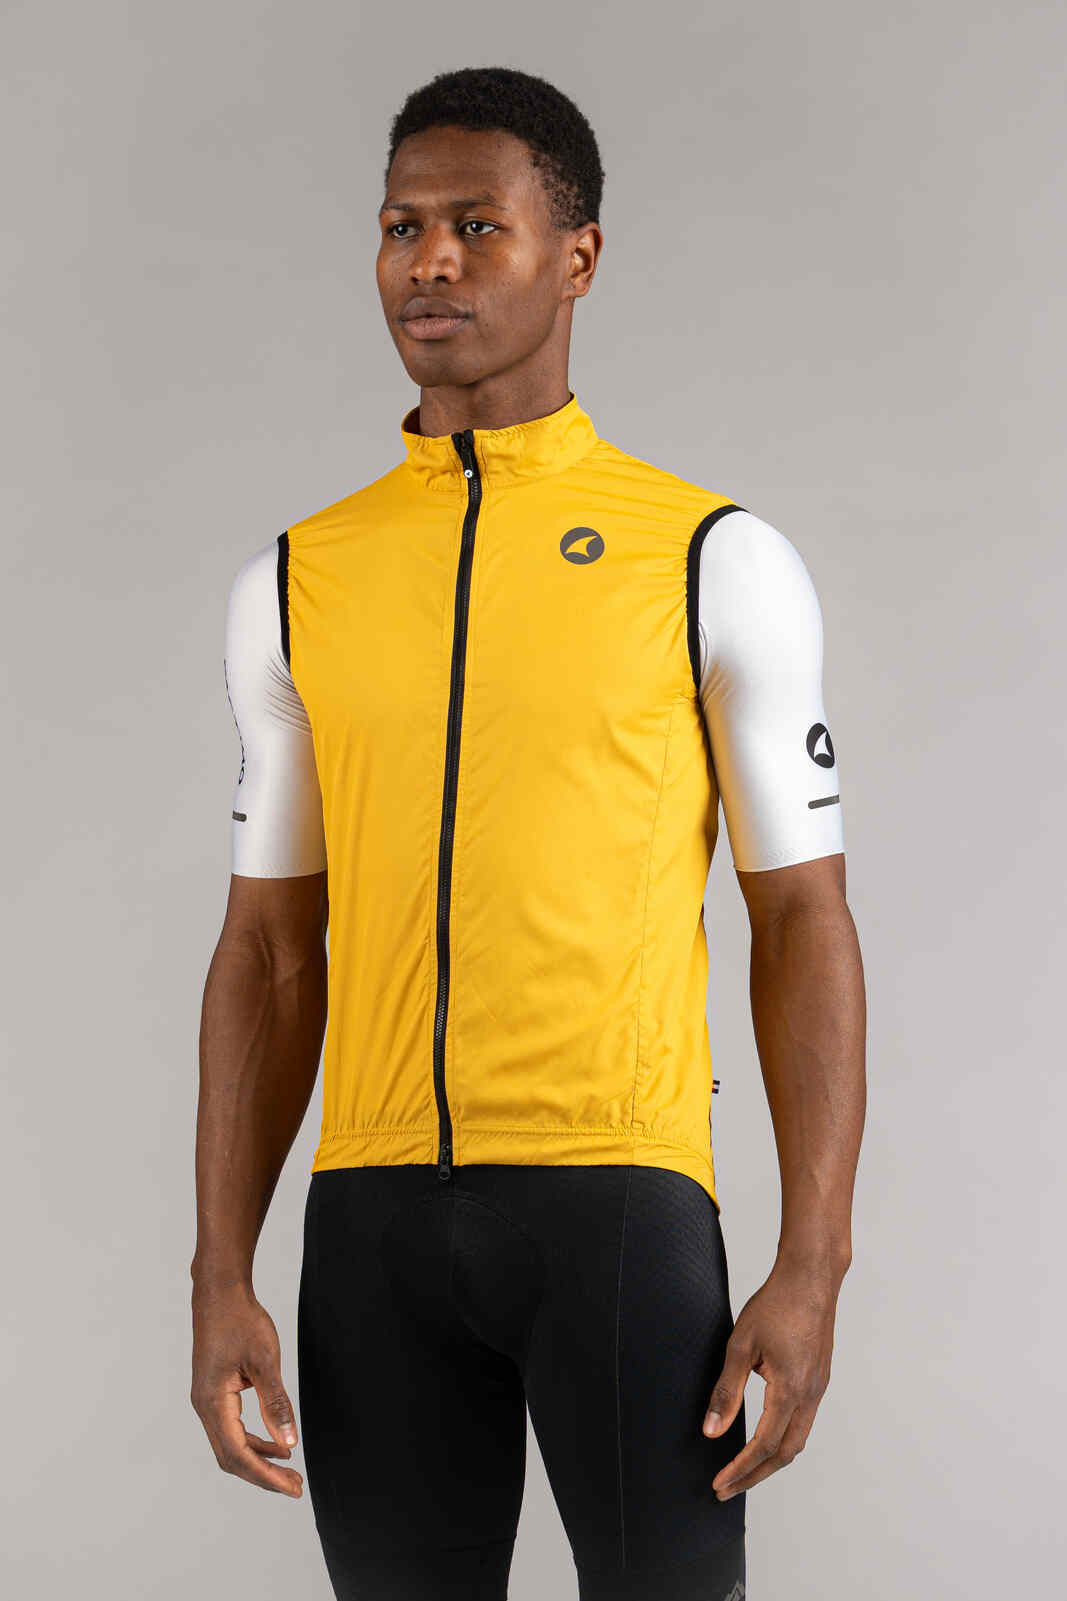 Men's Golden Yellow Packable Cycling Wind Vest - Front View